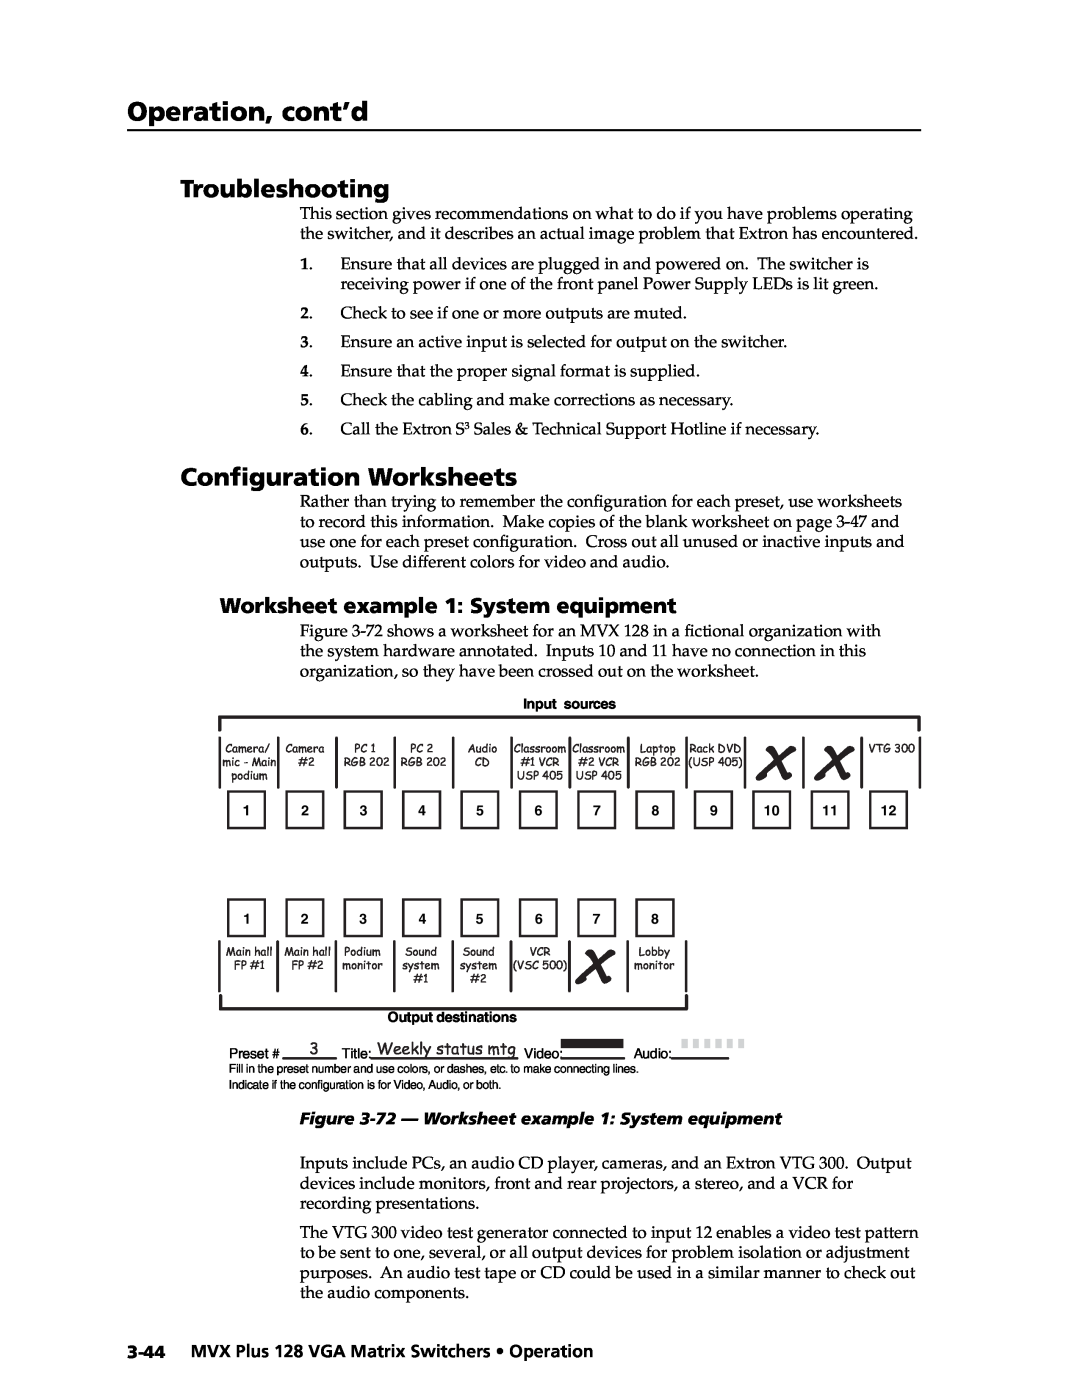 Extron electronic MVX PLUS 128 manual Troubleshooting, Conﬁguration Worksheets, Worksheet example 1 System equipment 